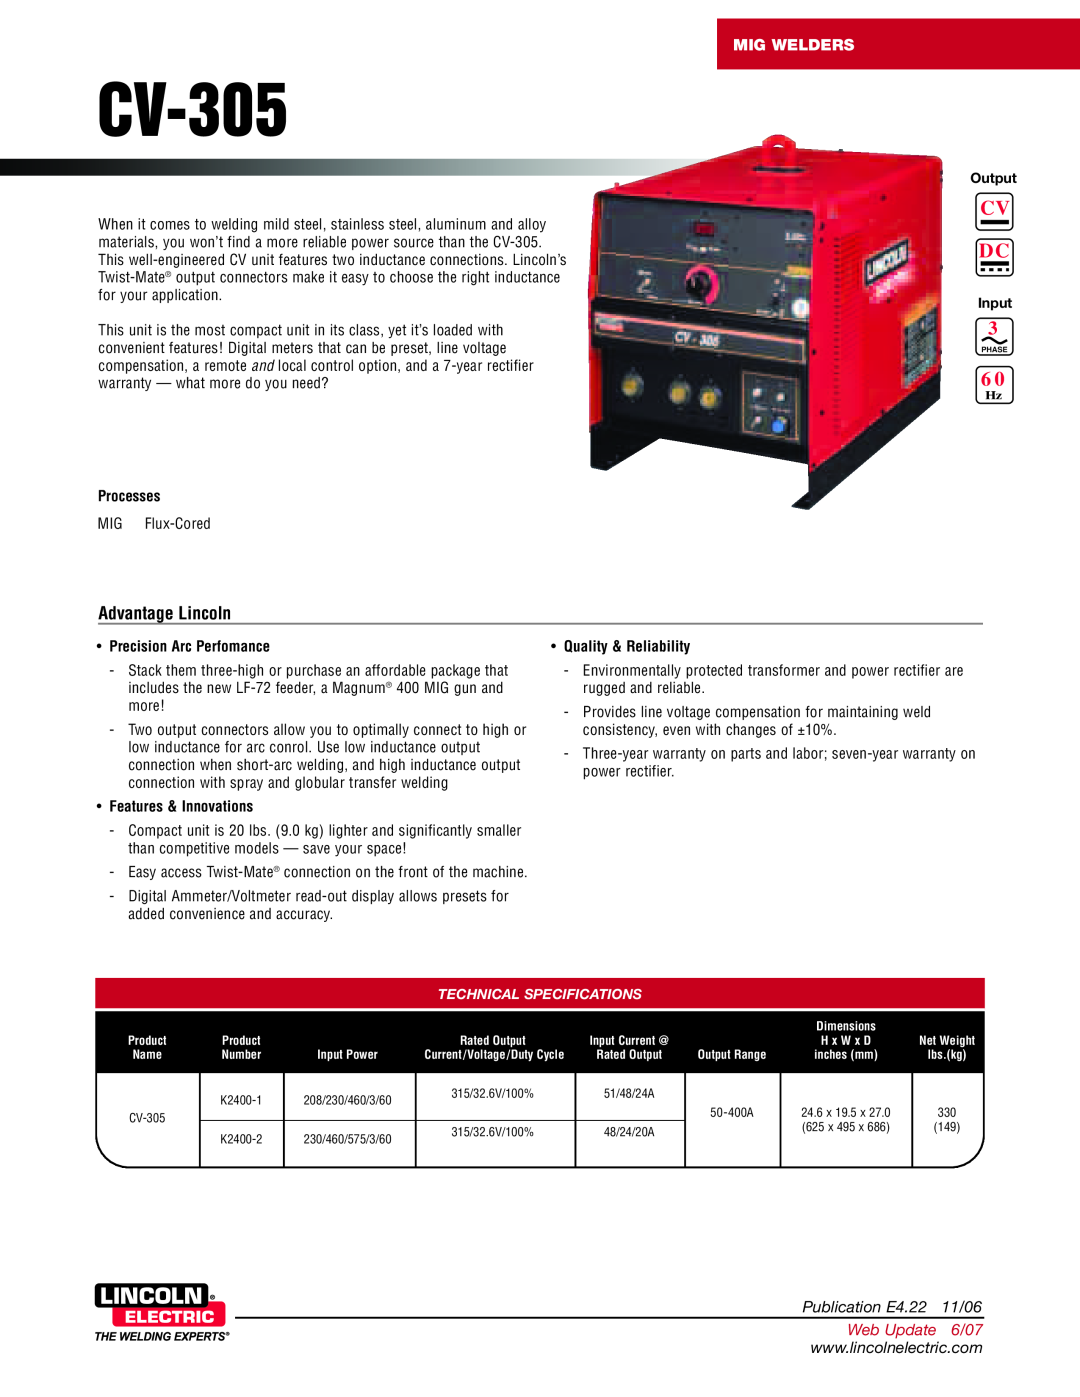 Lincoln Electric CV-305 warranty Advantage Lincoln, Publication E4.22 11/06, Processes, Precision Arc Perfomance, Output 